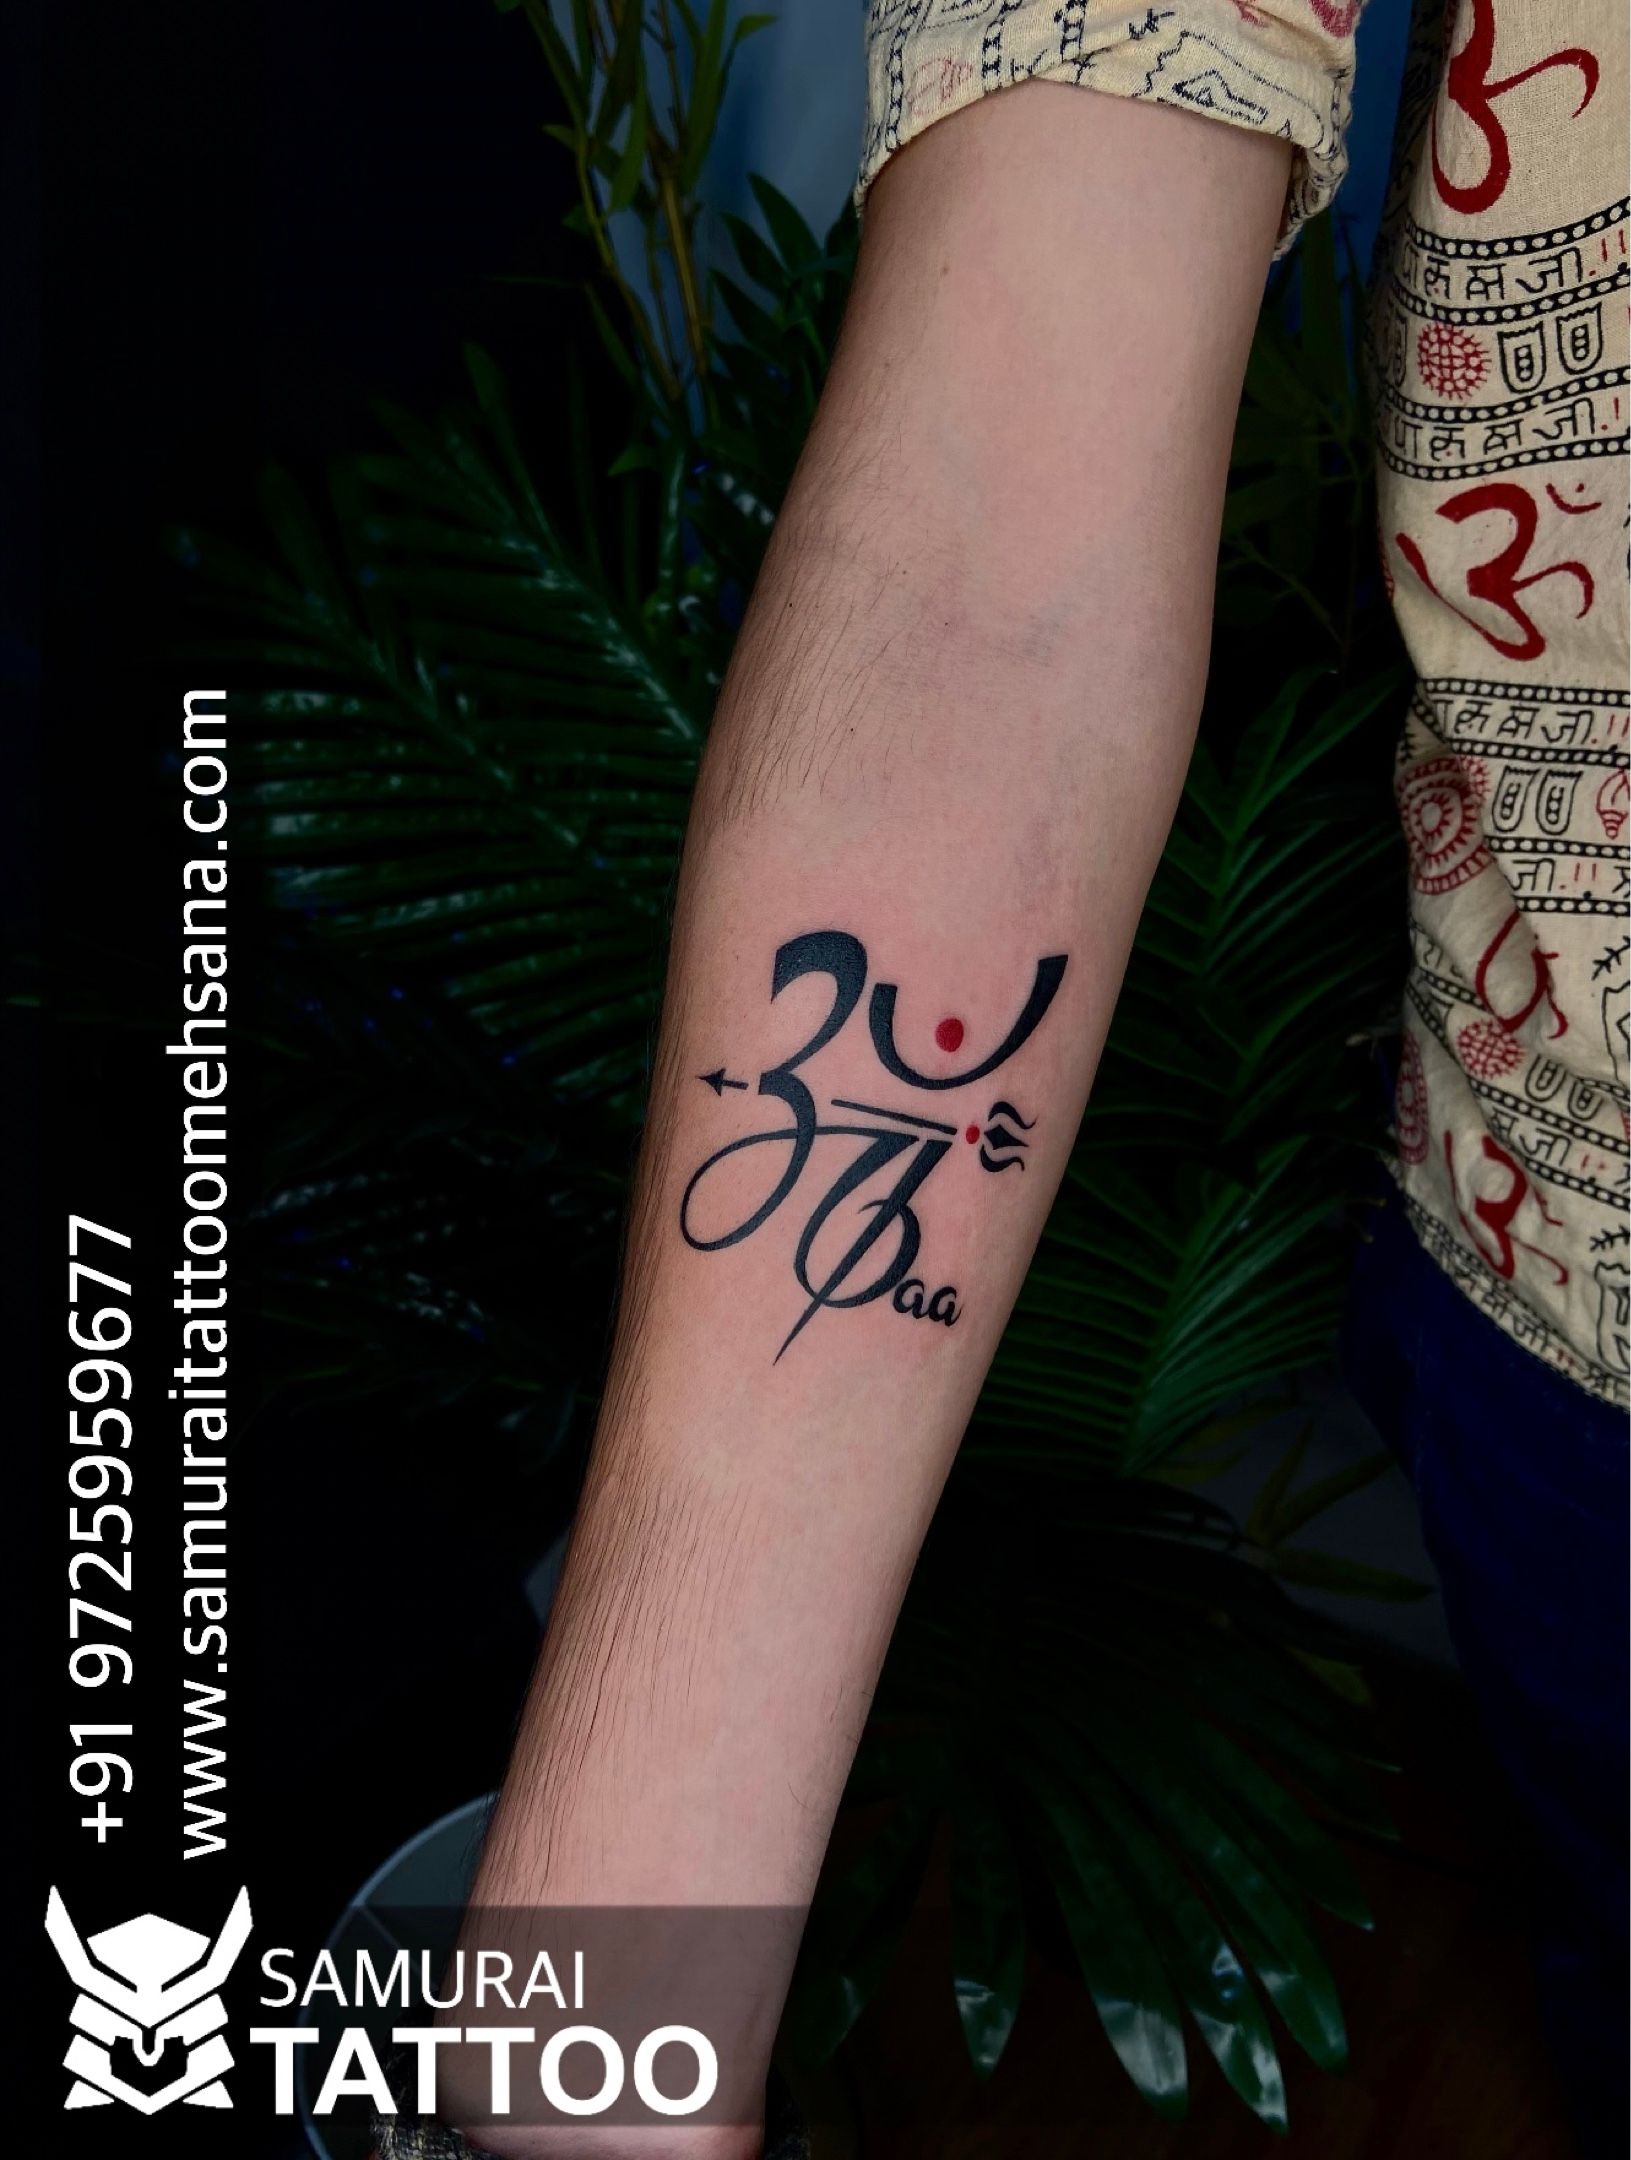  maa tattoo designs    9016844441 call now for appointment   Tattoo Adda Rajkot Gujarat  maa mom feather peacock momlife   Instagram